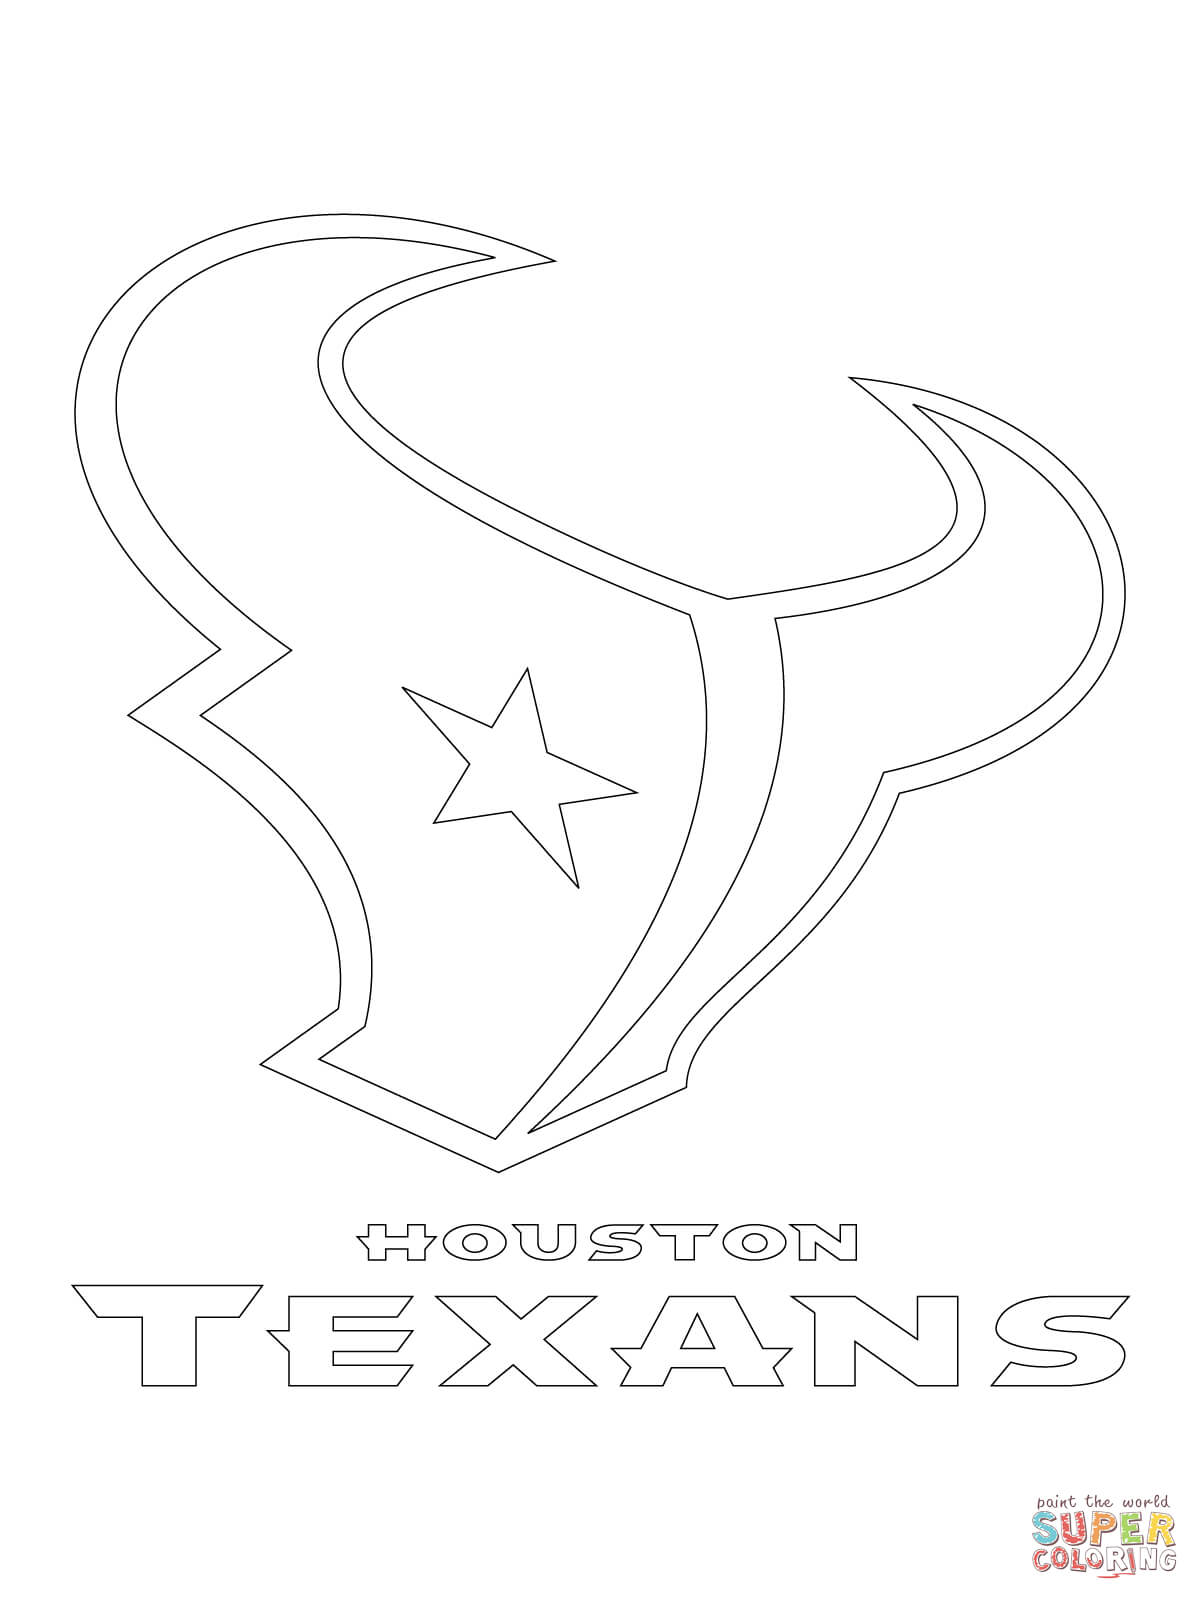 Houston Texans logo coloring page